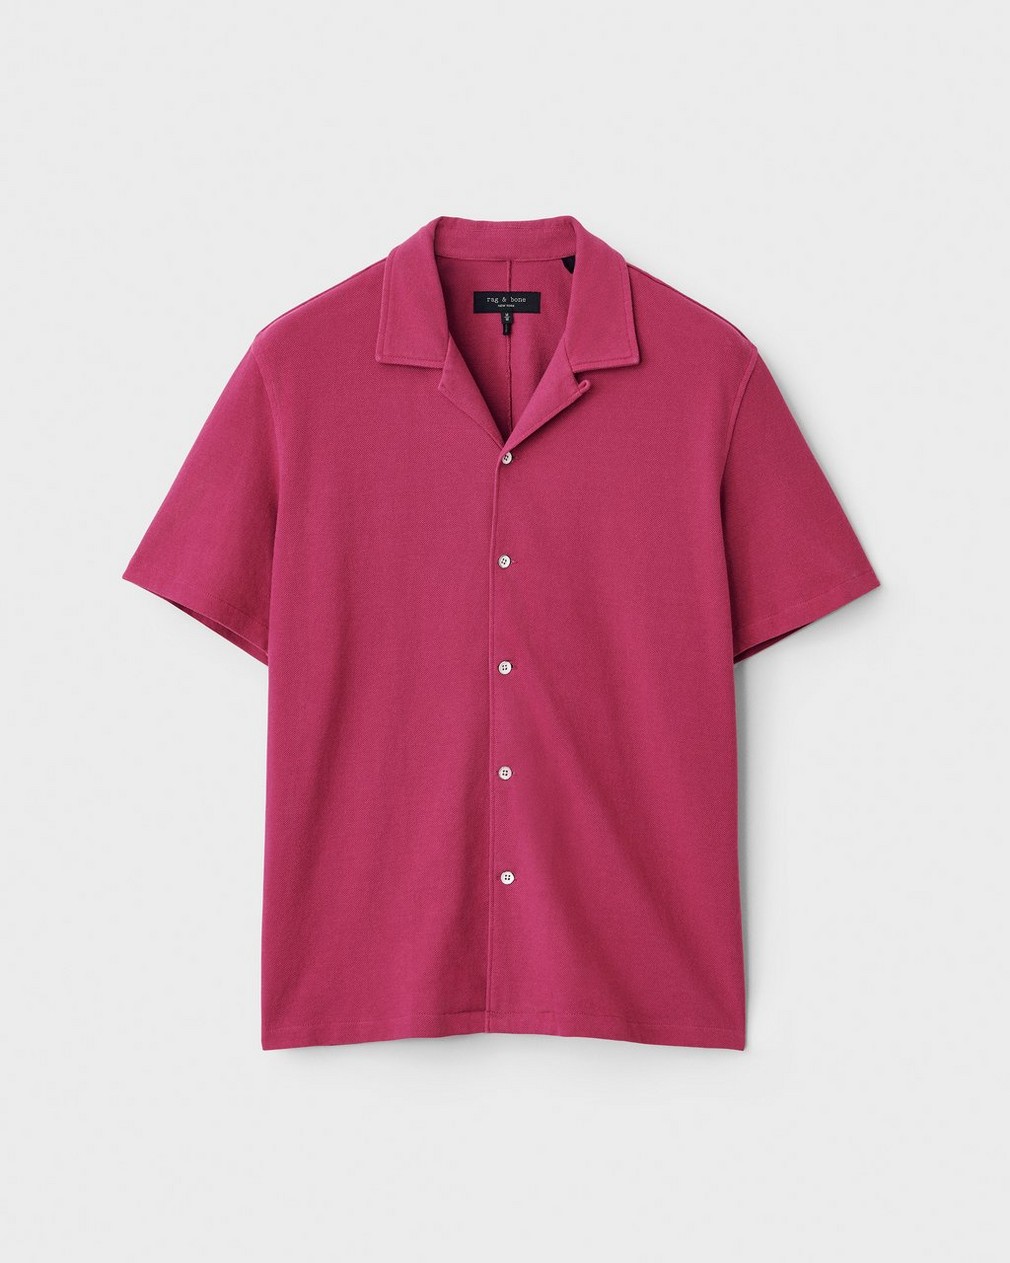 Avery Cotton Pique Knit Shirt